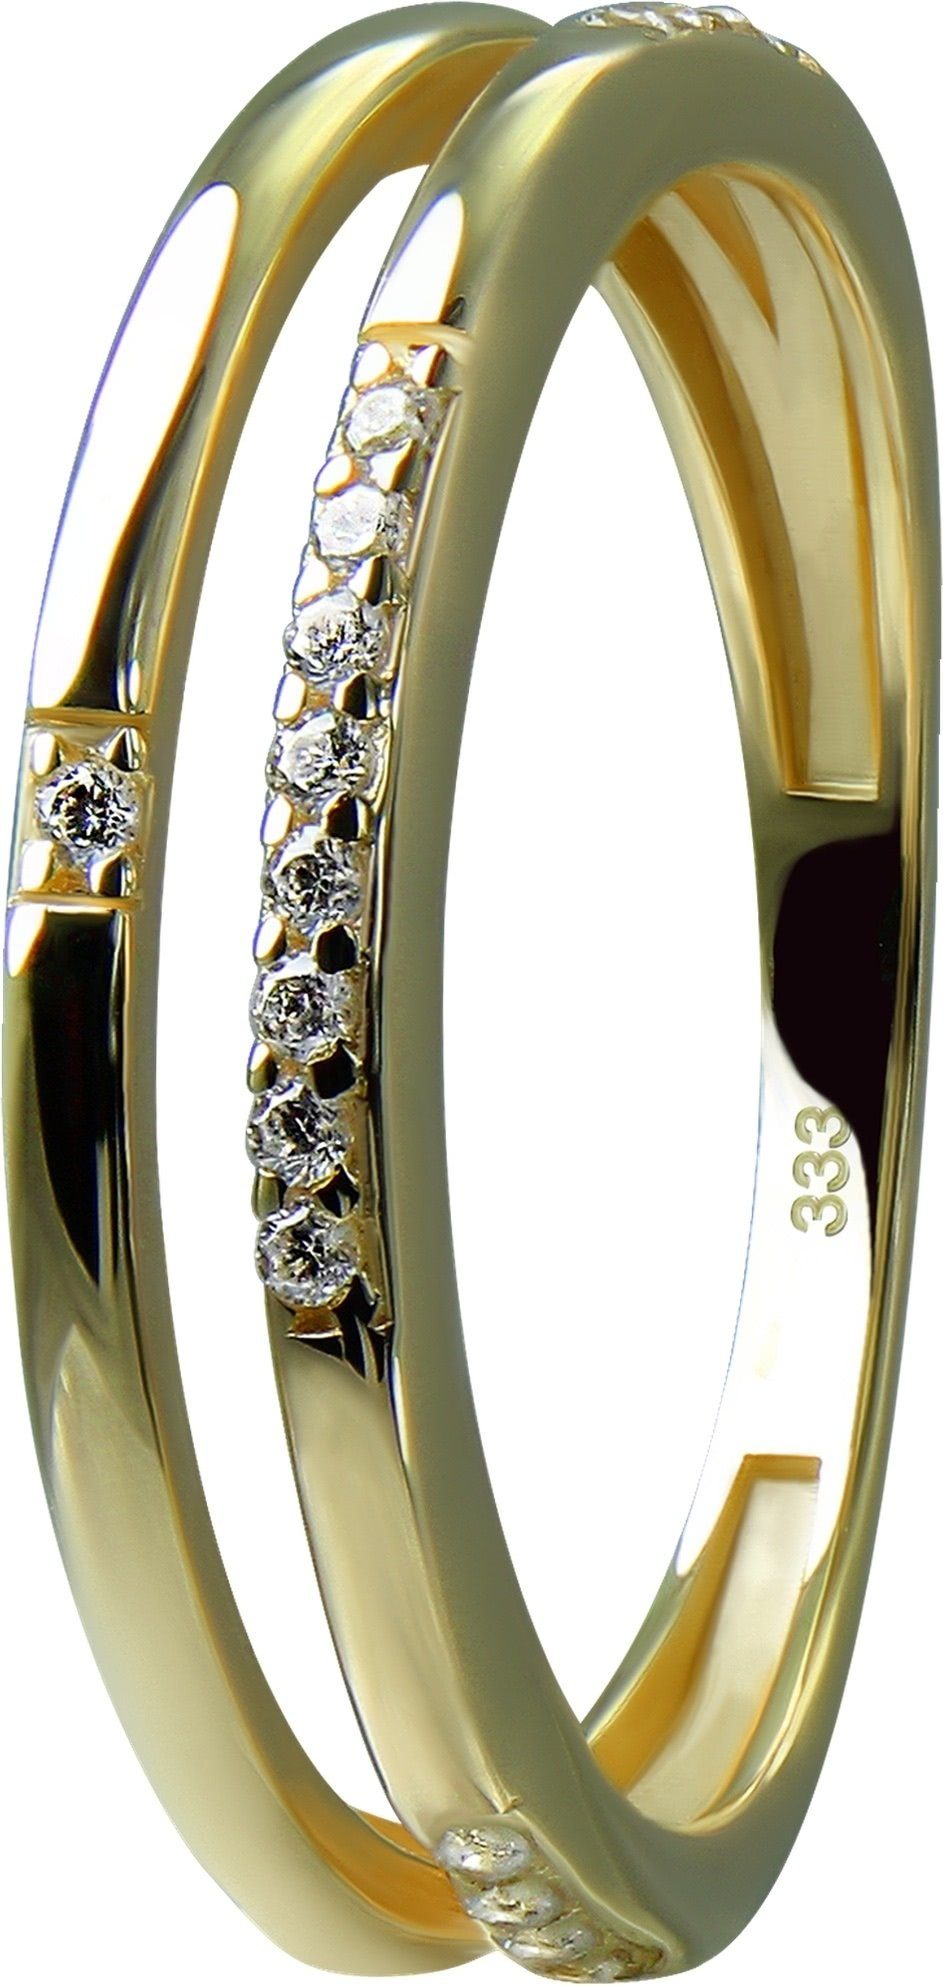 GoldDream Goldring GoldDream Gold 8 Ring weiß (Fingerring), Double 333 Karat, Ring - Double Farbe: gold, Gr.58 Damen Gelbgold